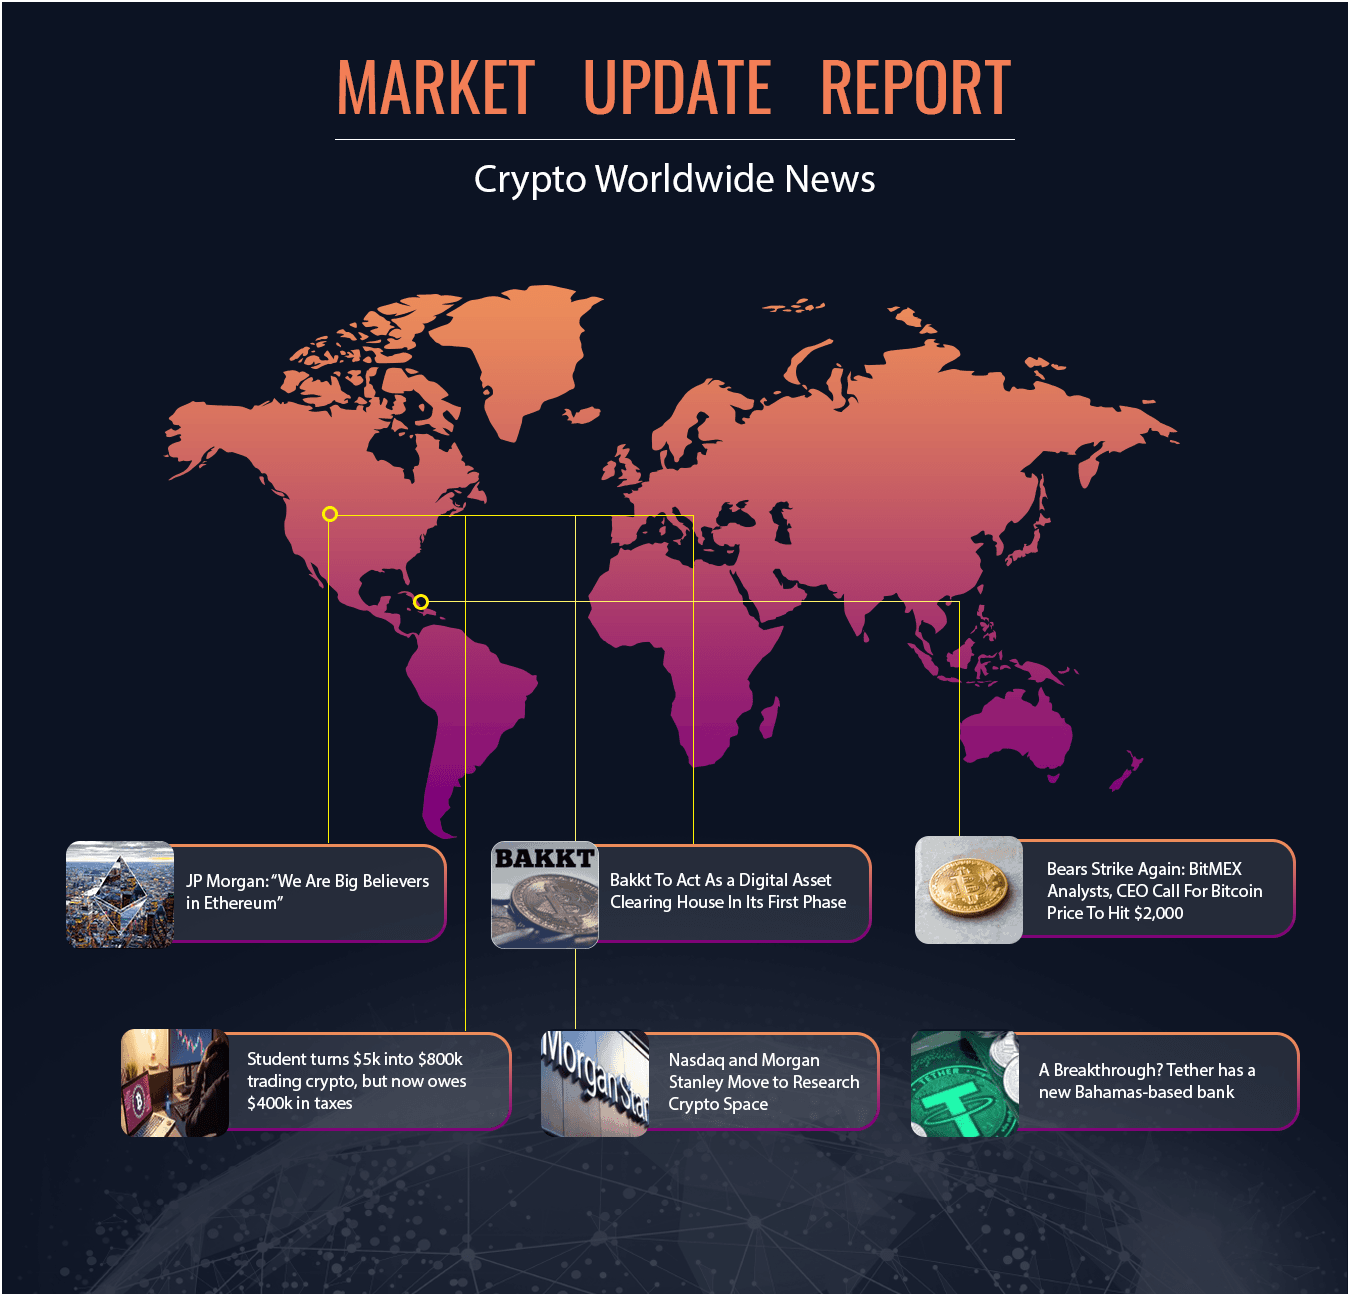 Market Update Report November 6: bullish days. Has the market sentiment changed?